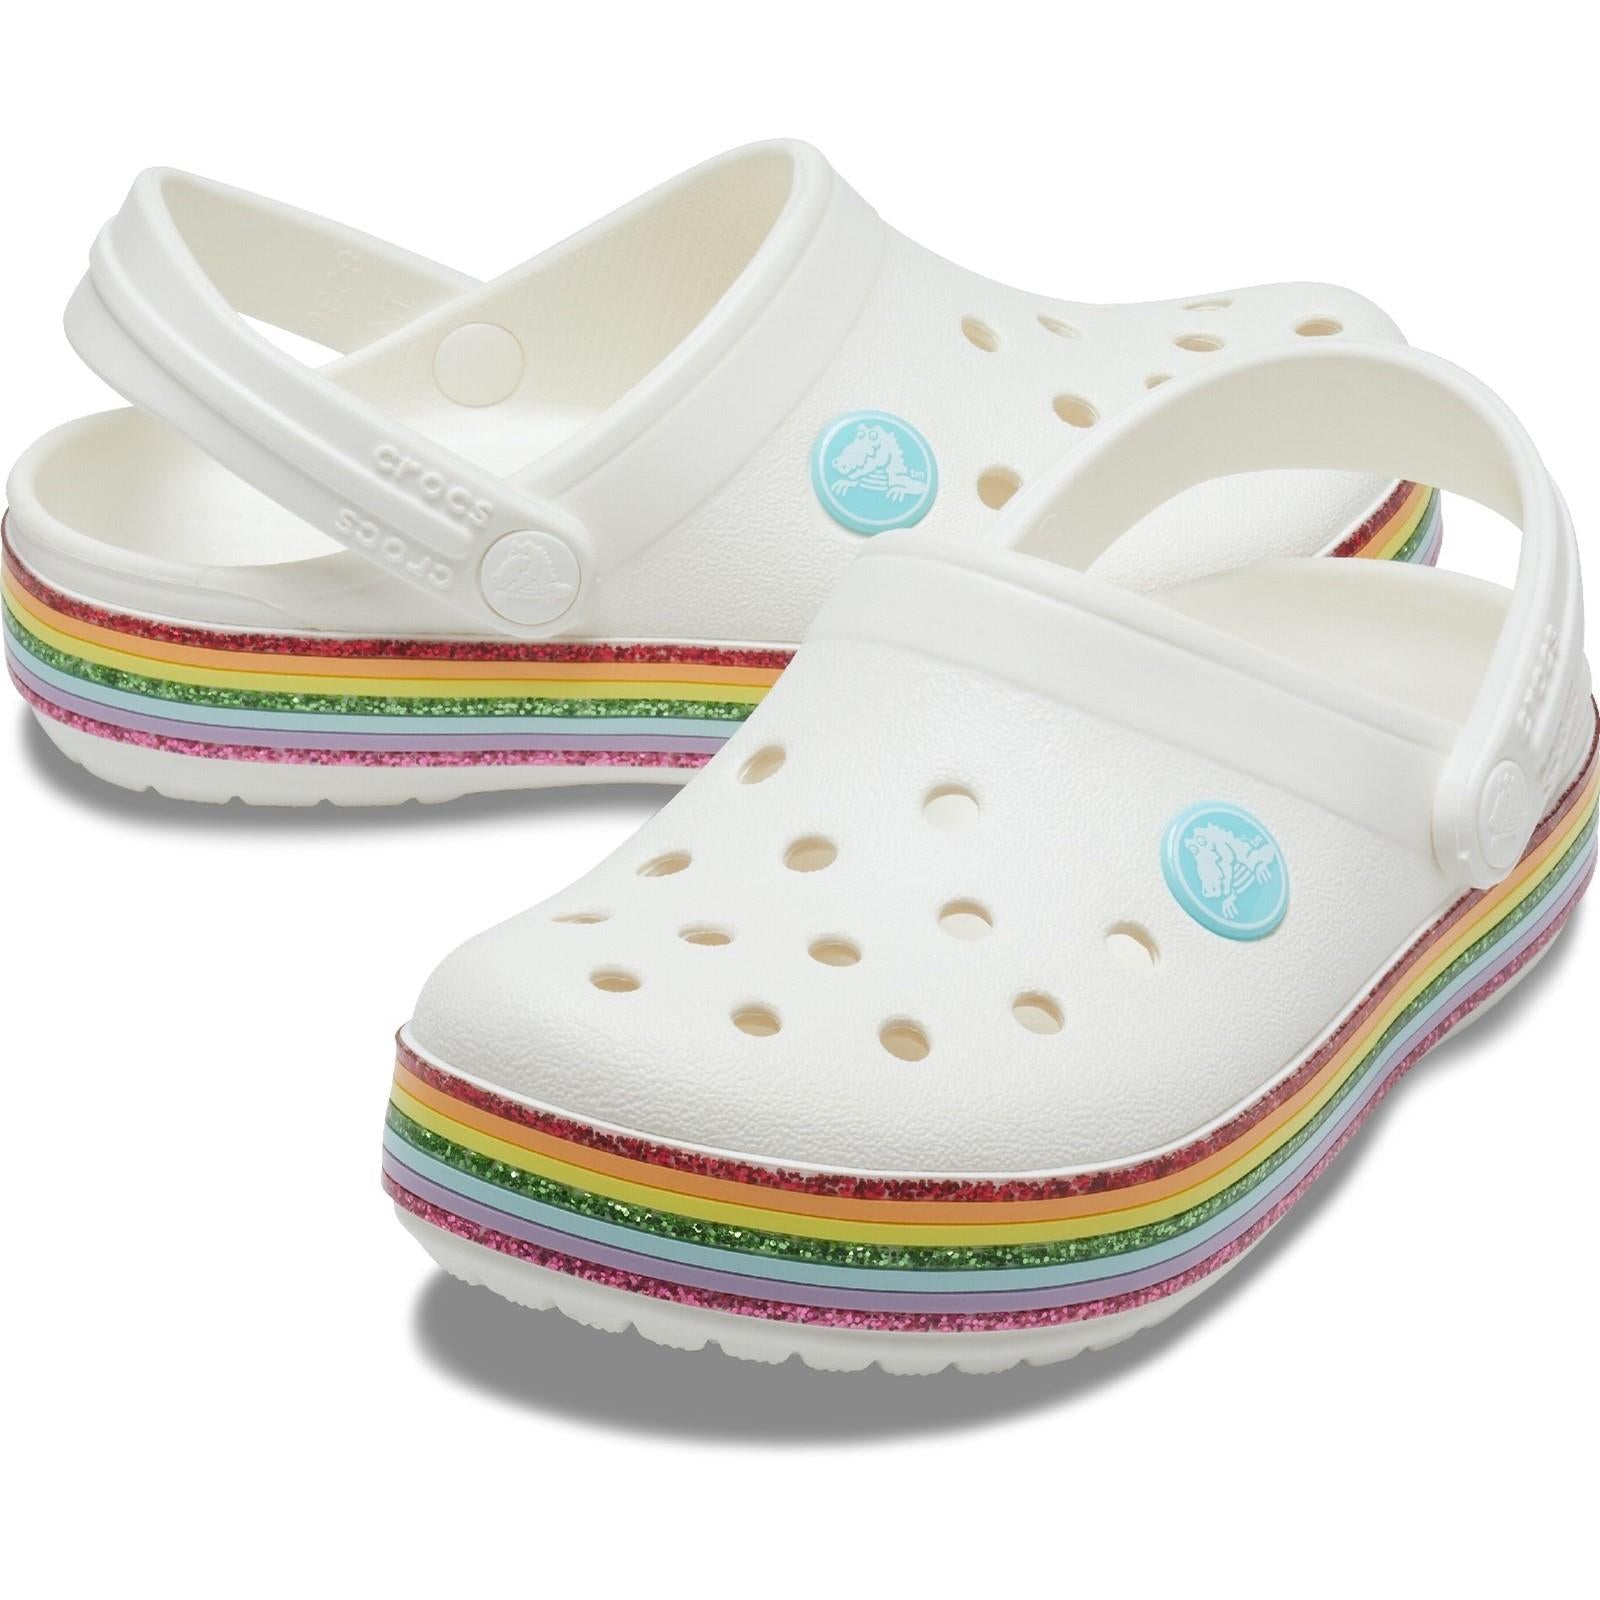 Crocs Rainbow Glitter Clog Sandals